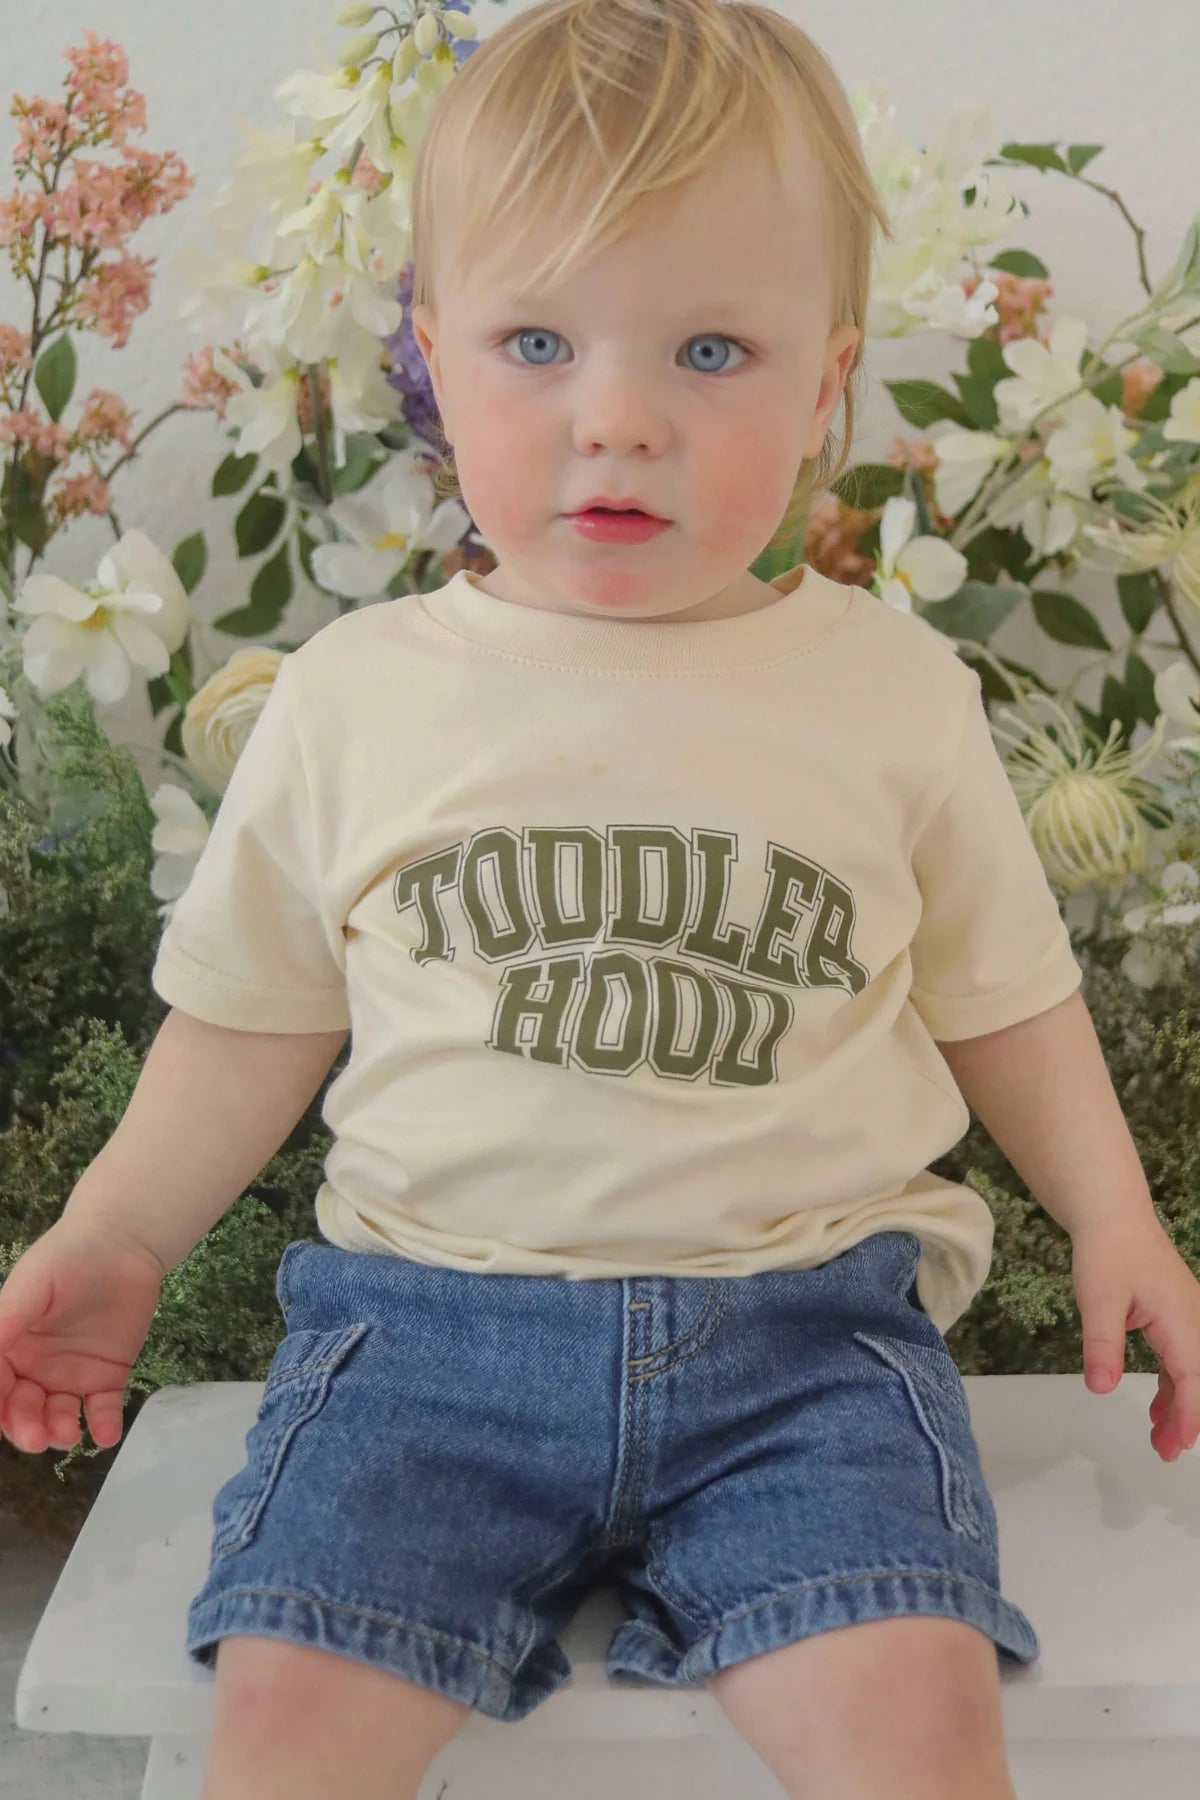 Toddler Hood Tee